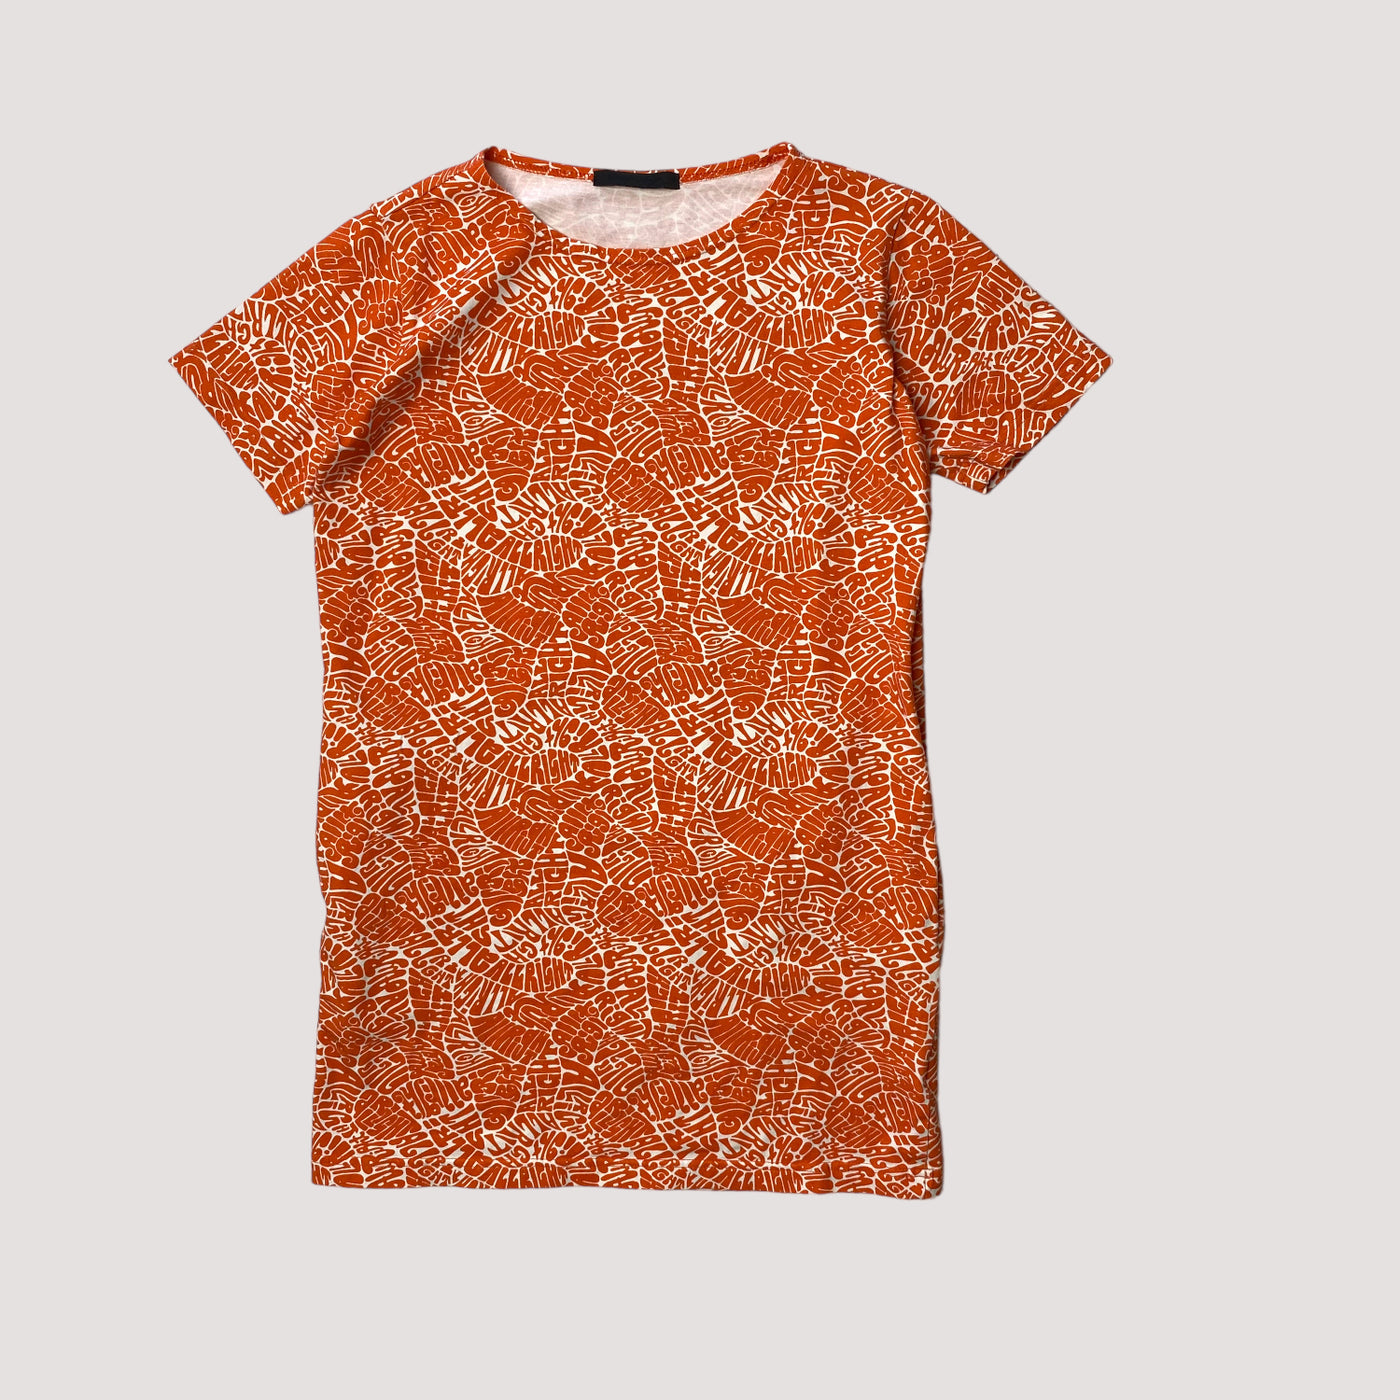 Vimma t-shirt dress, all right | 130cm